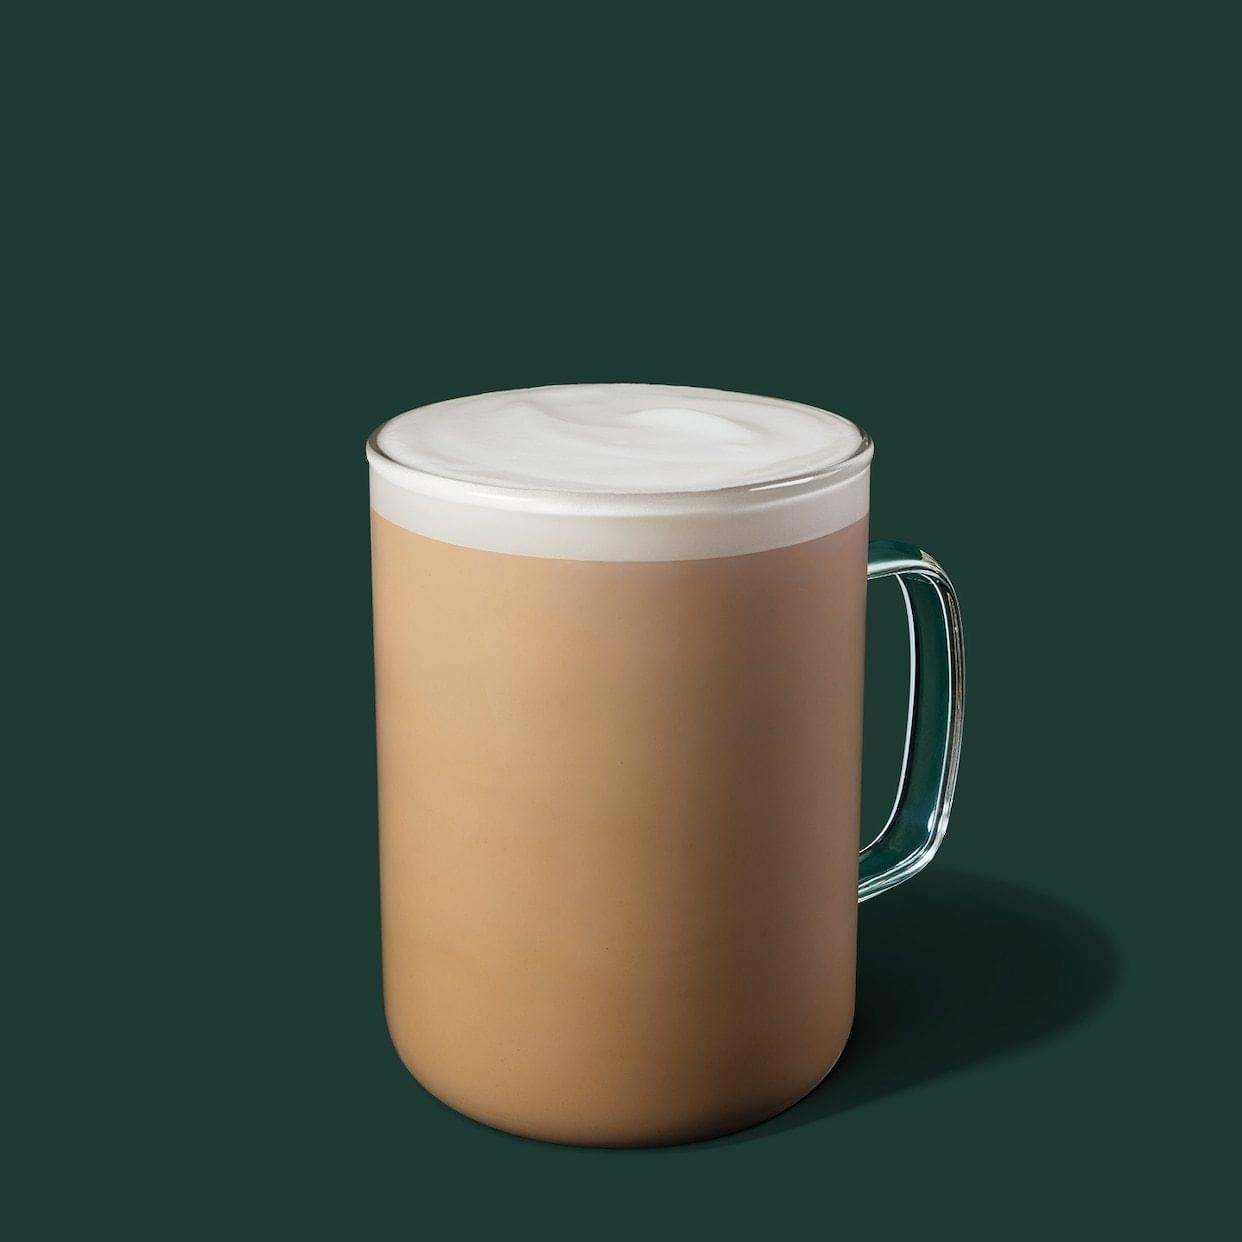 Starbucks Tall Chai Latte Nutrition Facts